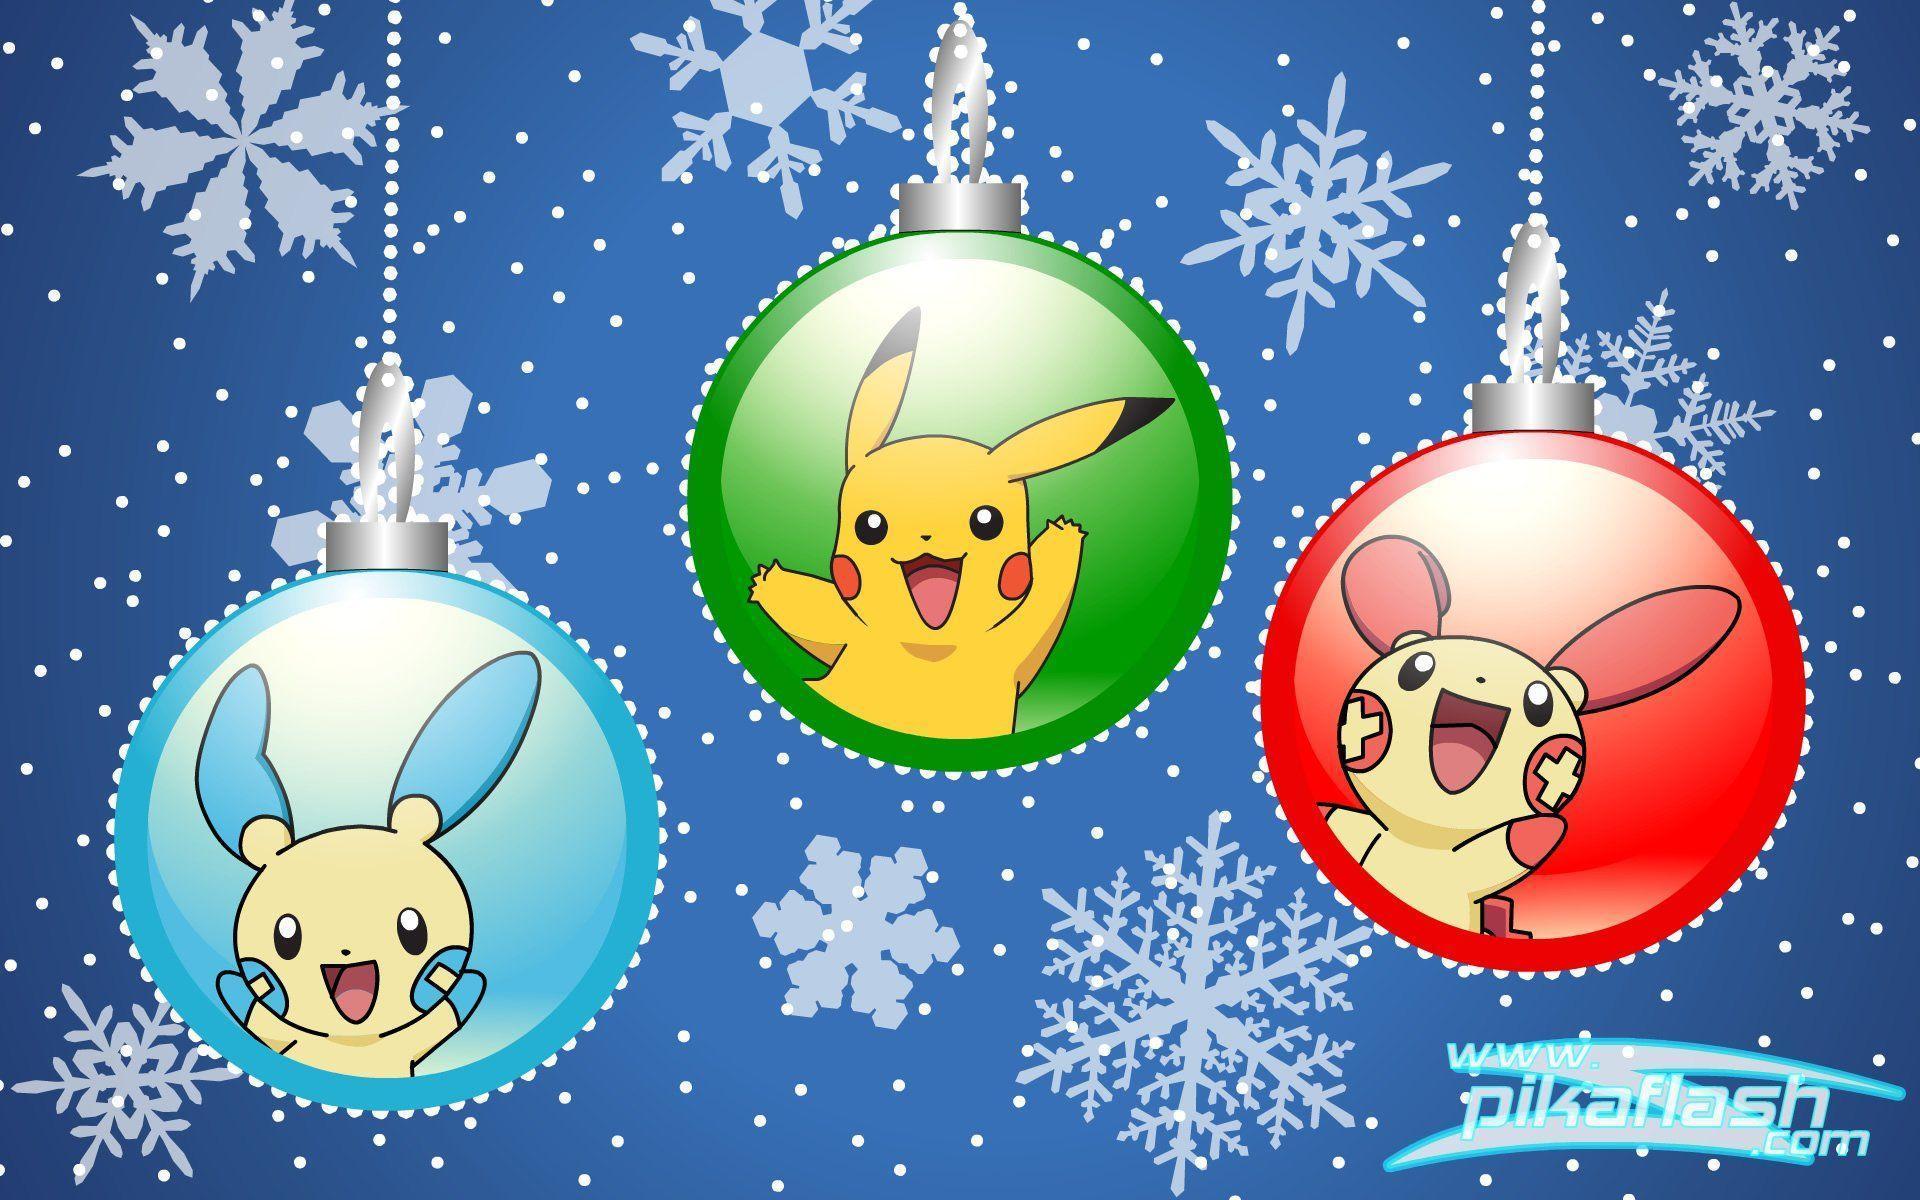 Minun (Pokémon) HD Wallpaper and Background Image